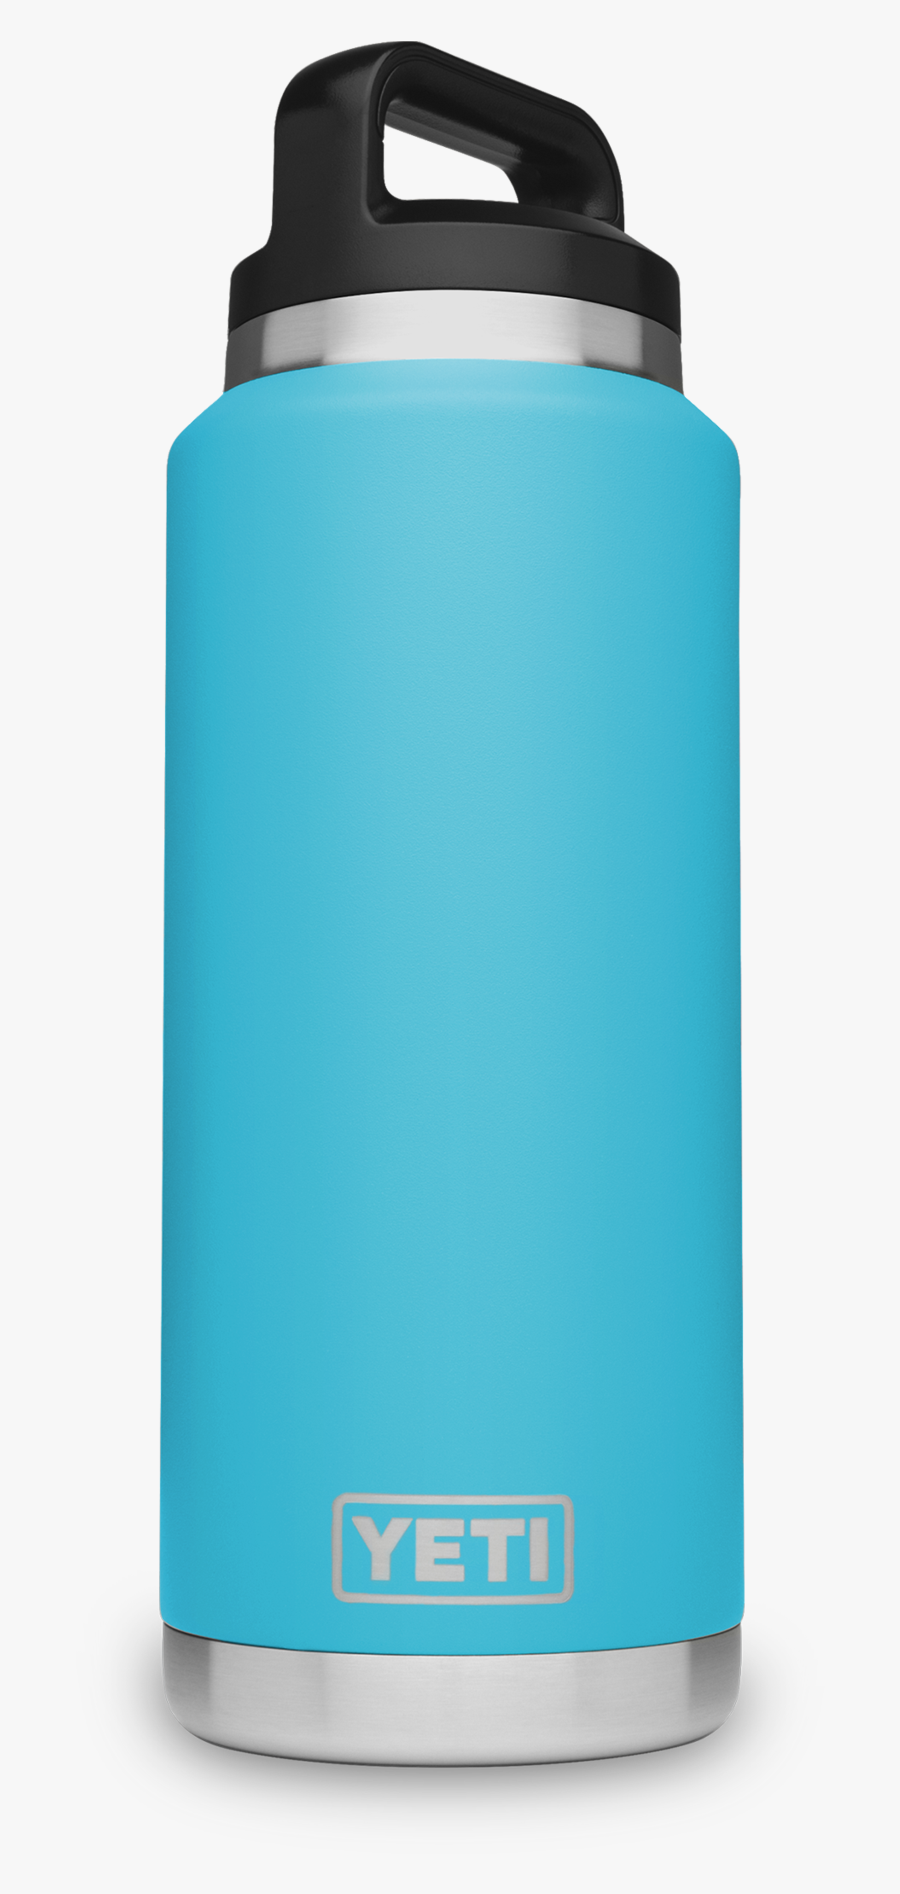 yeti insulated water bottle